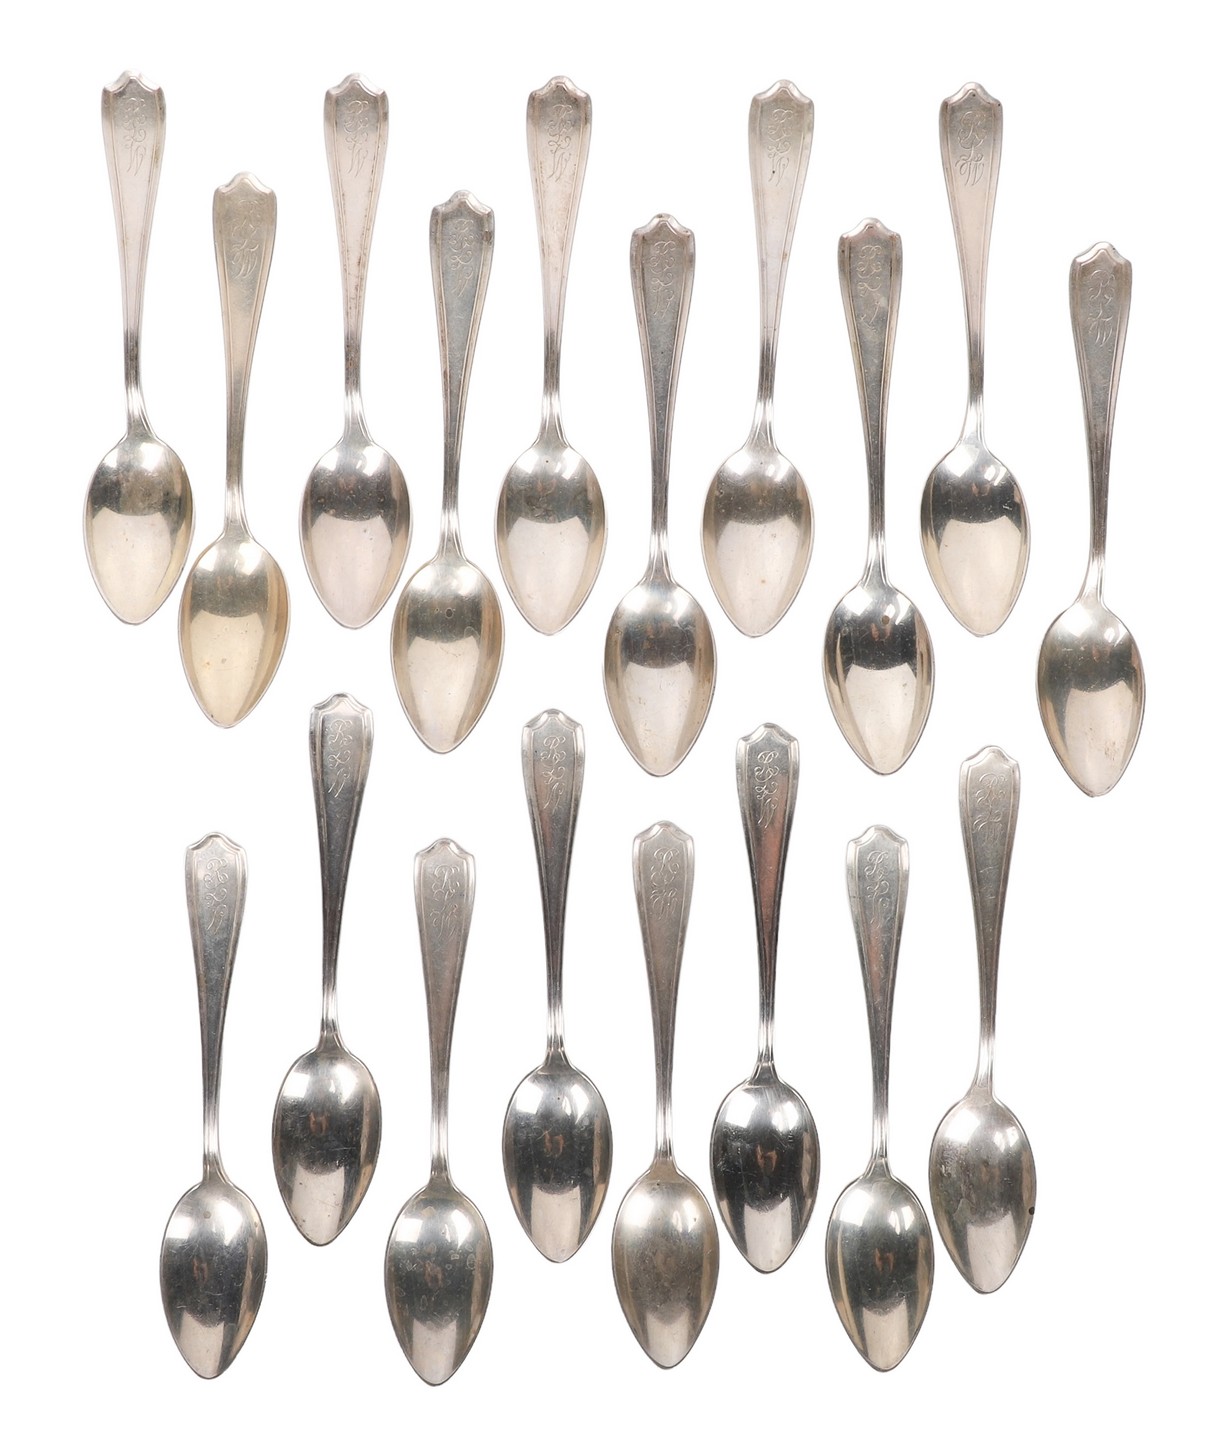 (18) Alvin sterling silver teaspoons,